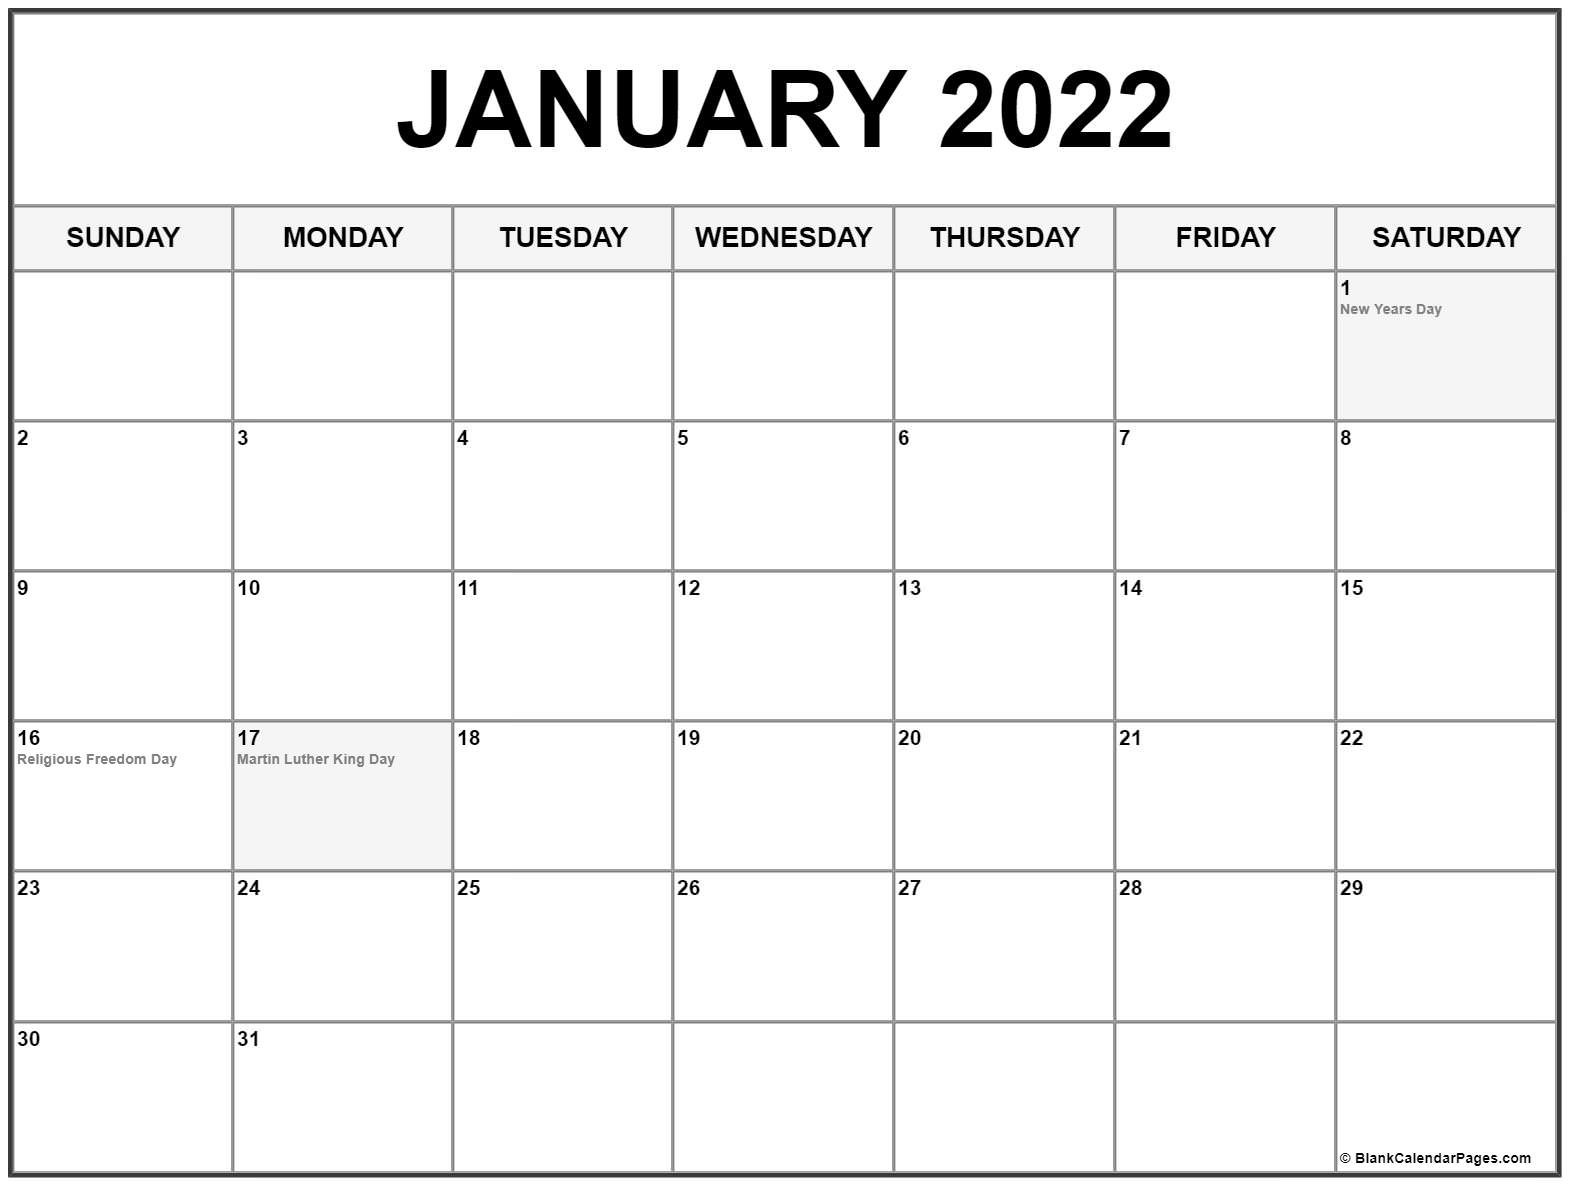 Jan 2022 Calendar With Holidays - Allcalendar